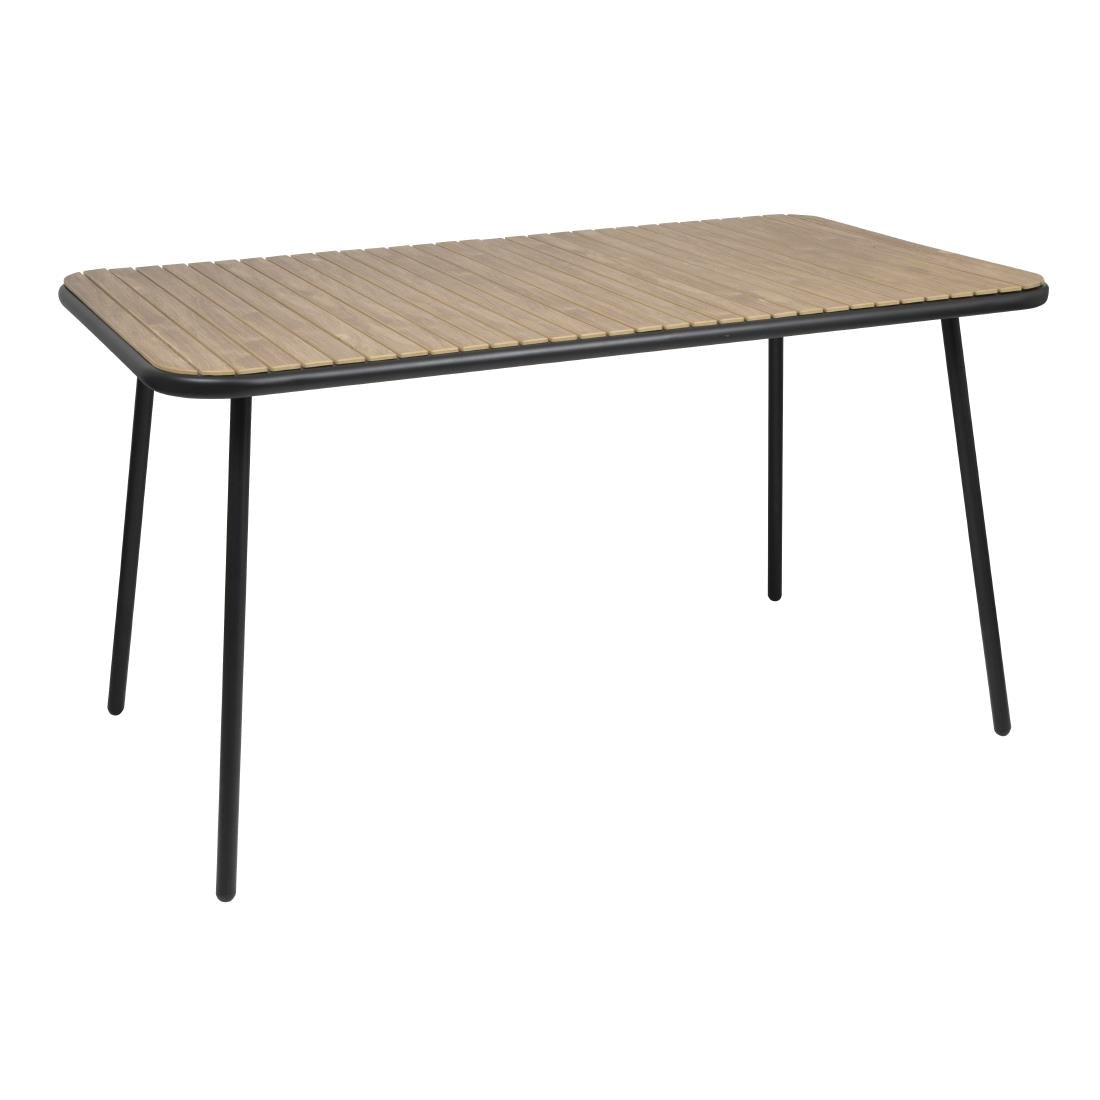 FU536 Bolero Santorini Rectangular Table Wood Effect 1400mm